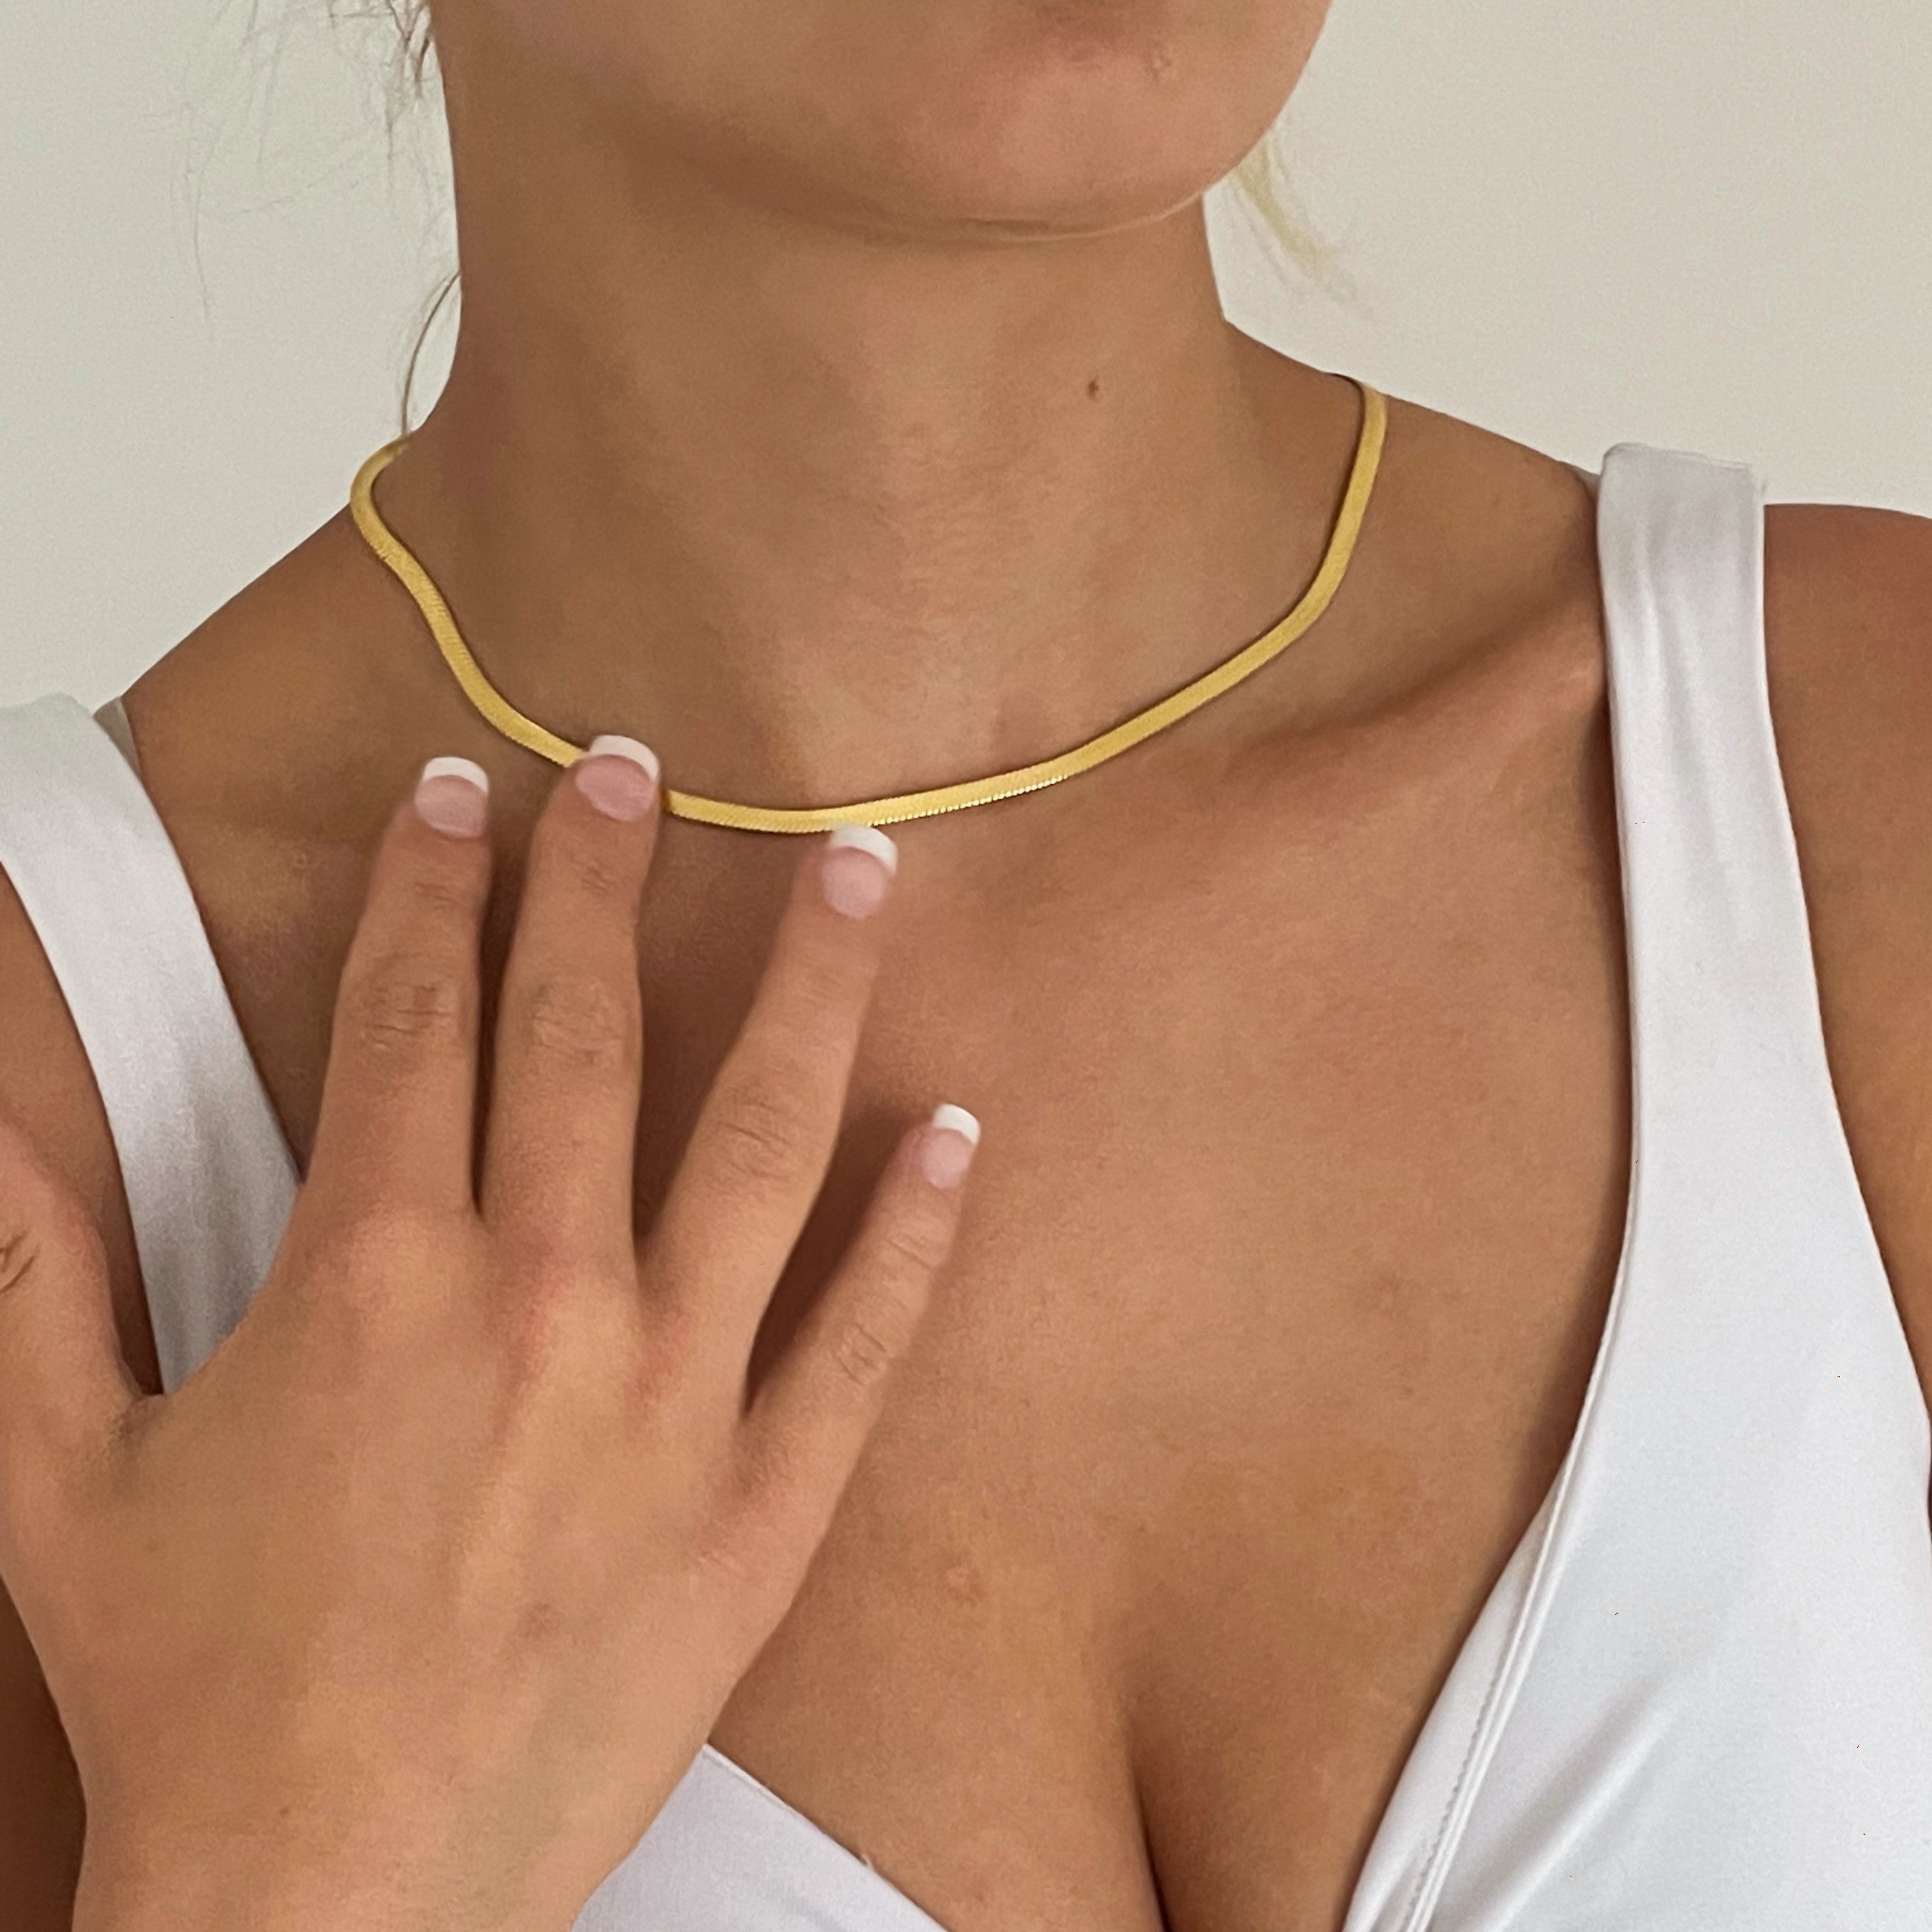 Fashionable gold herringbone choker necklace